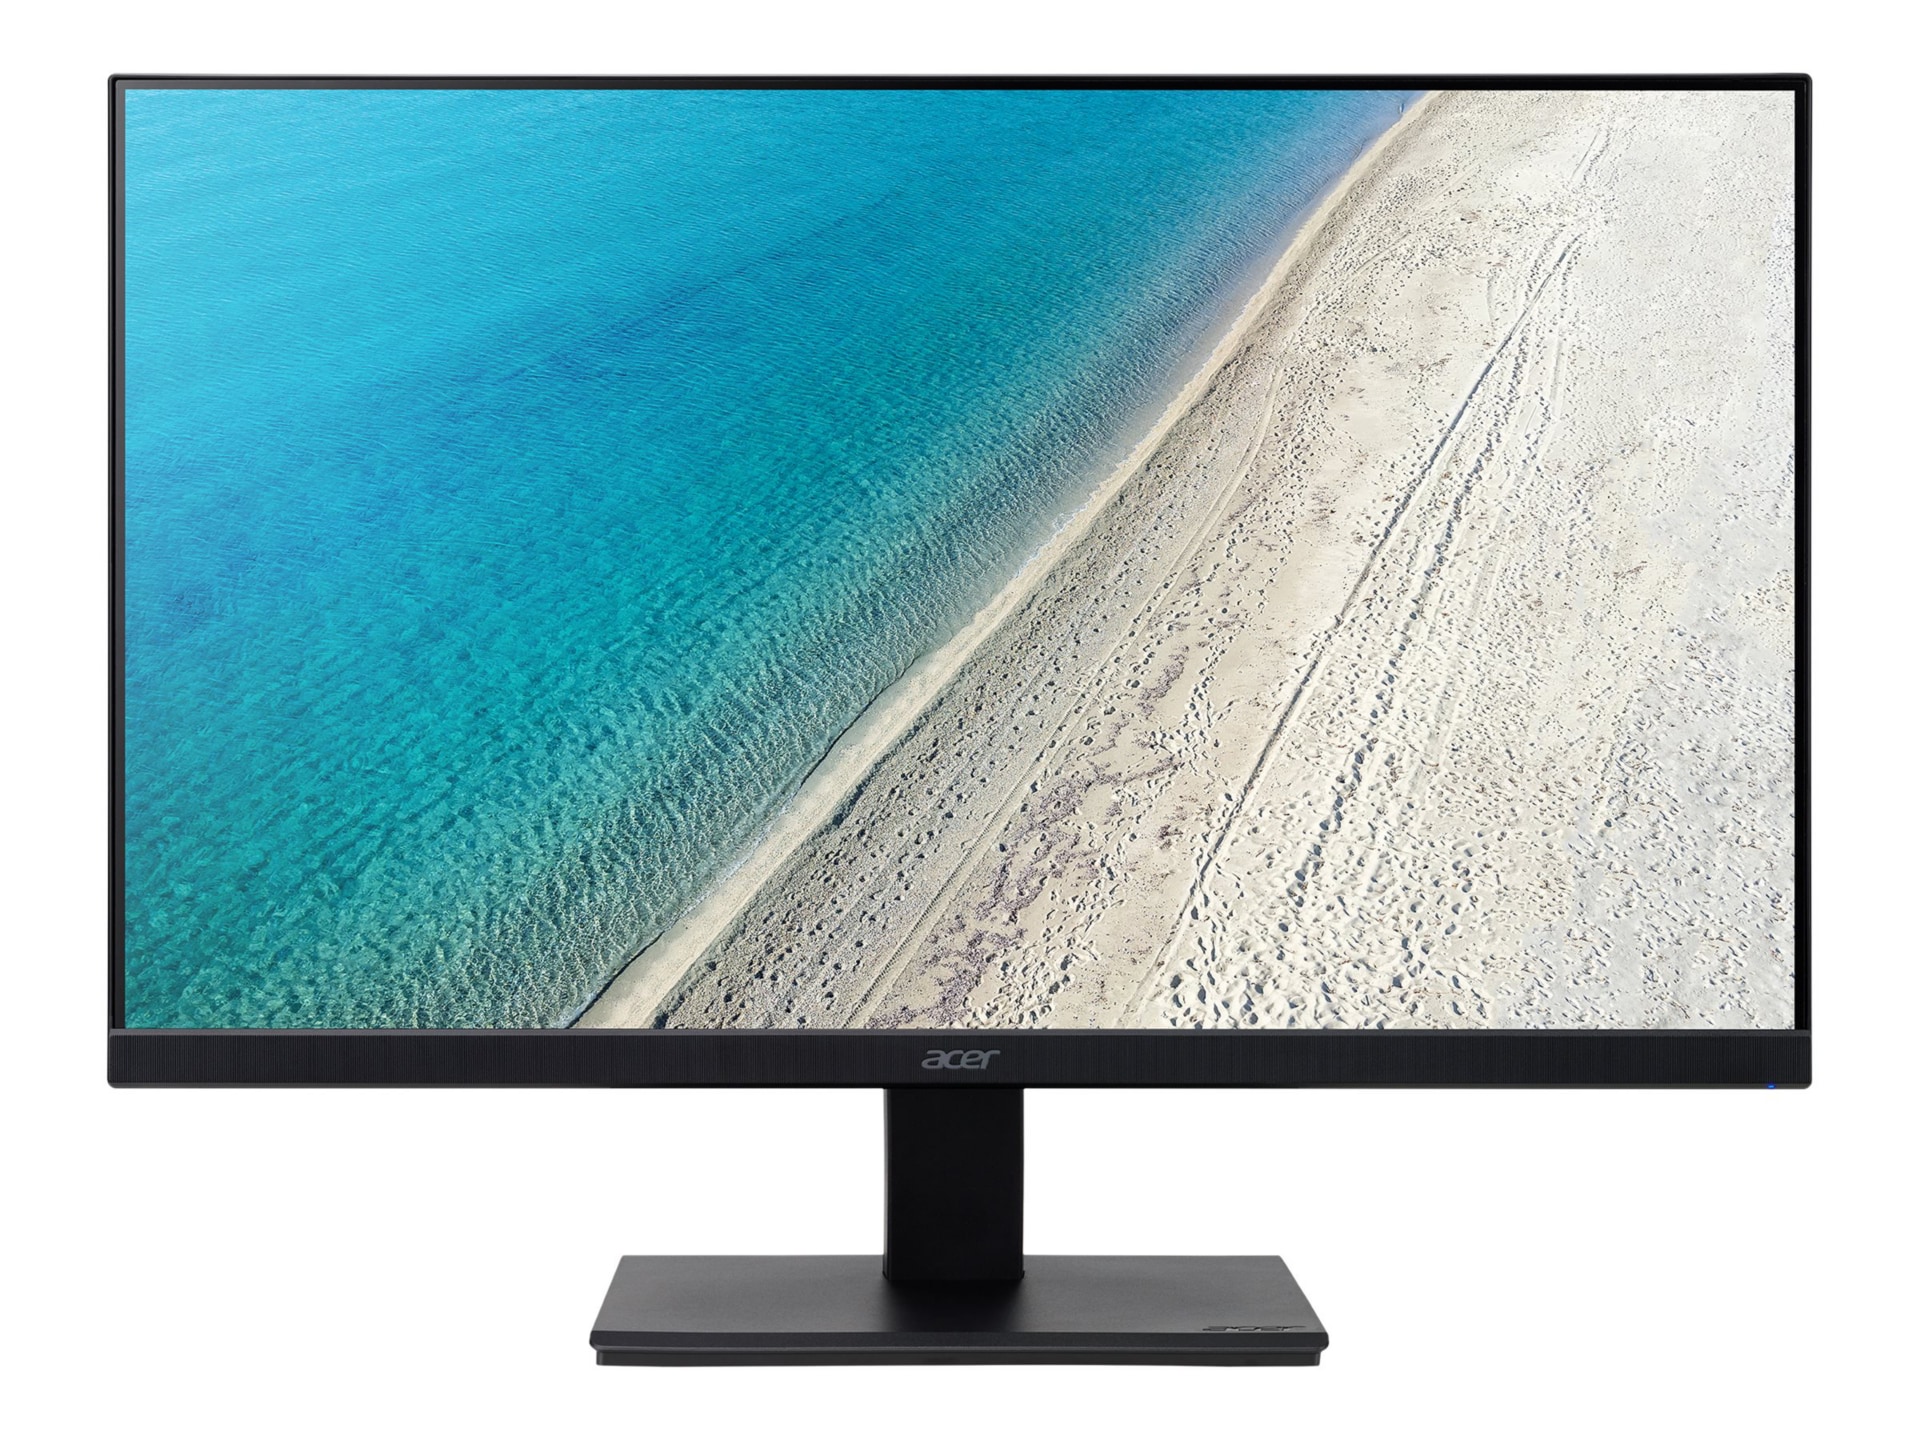 Acer Vero V227Q E3bmix - V7 Series - LED monitor - Full HD (1080p) - 22"